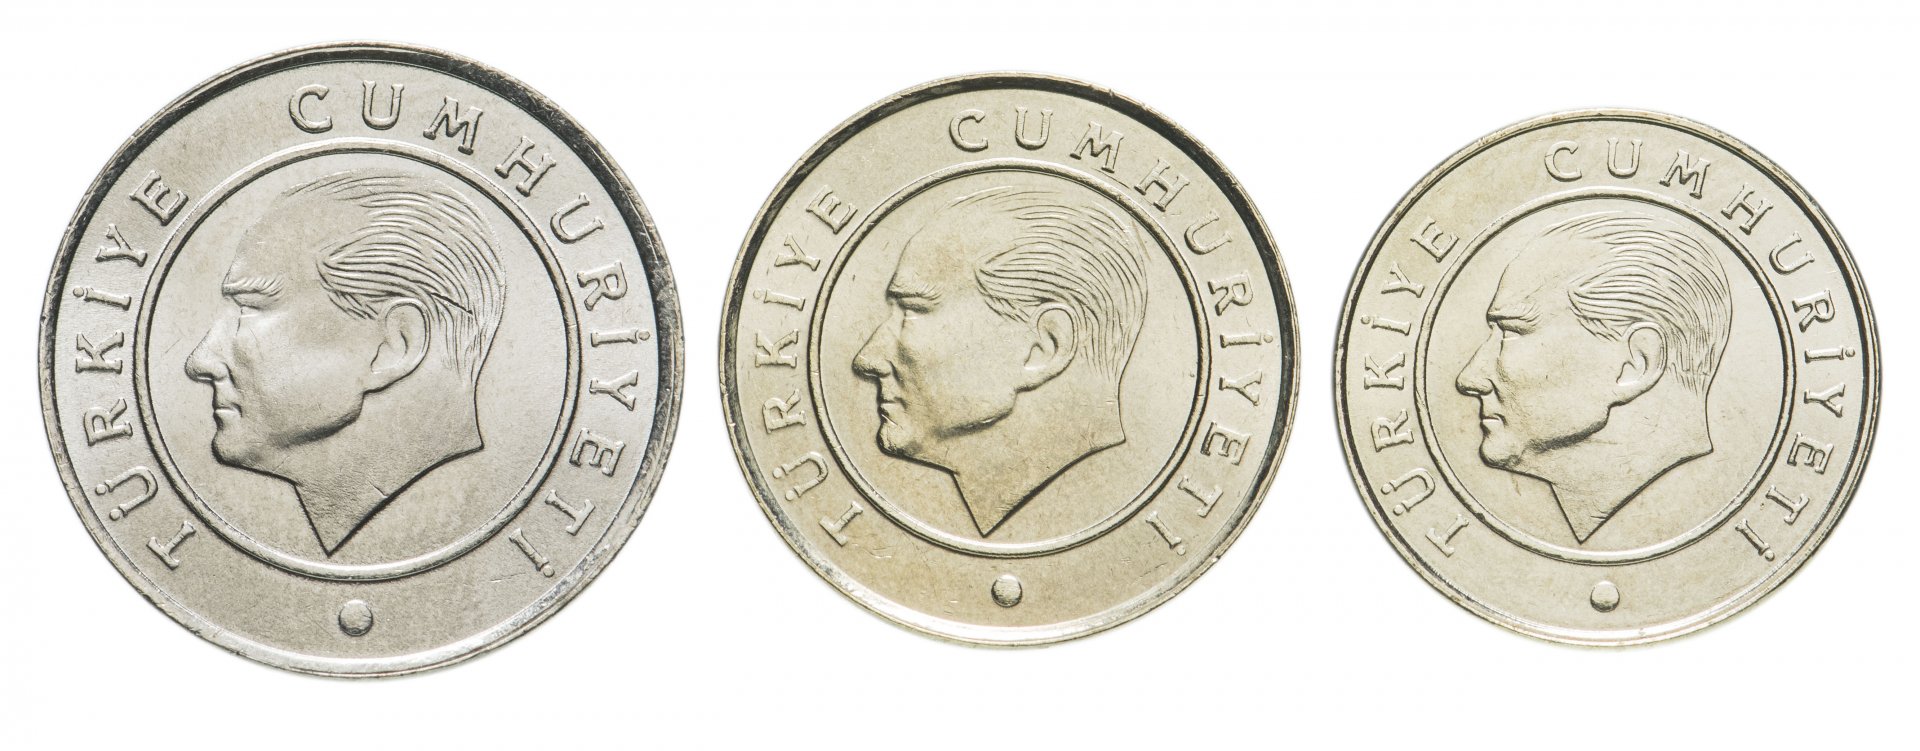 15 лир. Мустафа Кемаль Ататюрк на монетах. Турецкая монета Кемаль Ататюрк 1. Турция 25 курушей, 2021. Мустафа Ататюрк монеты.